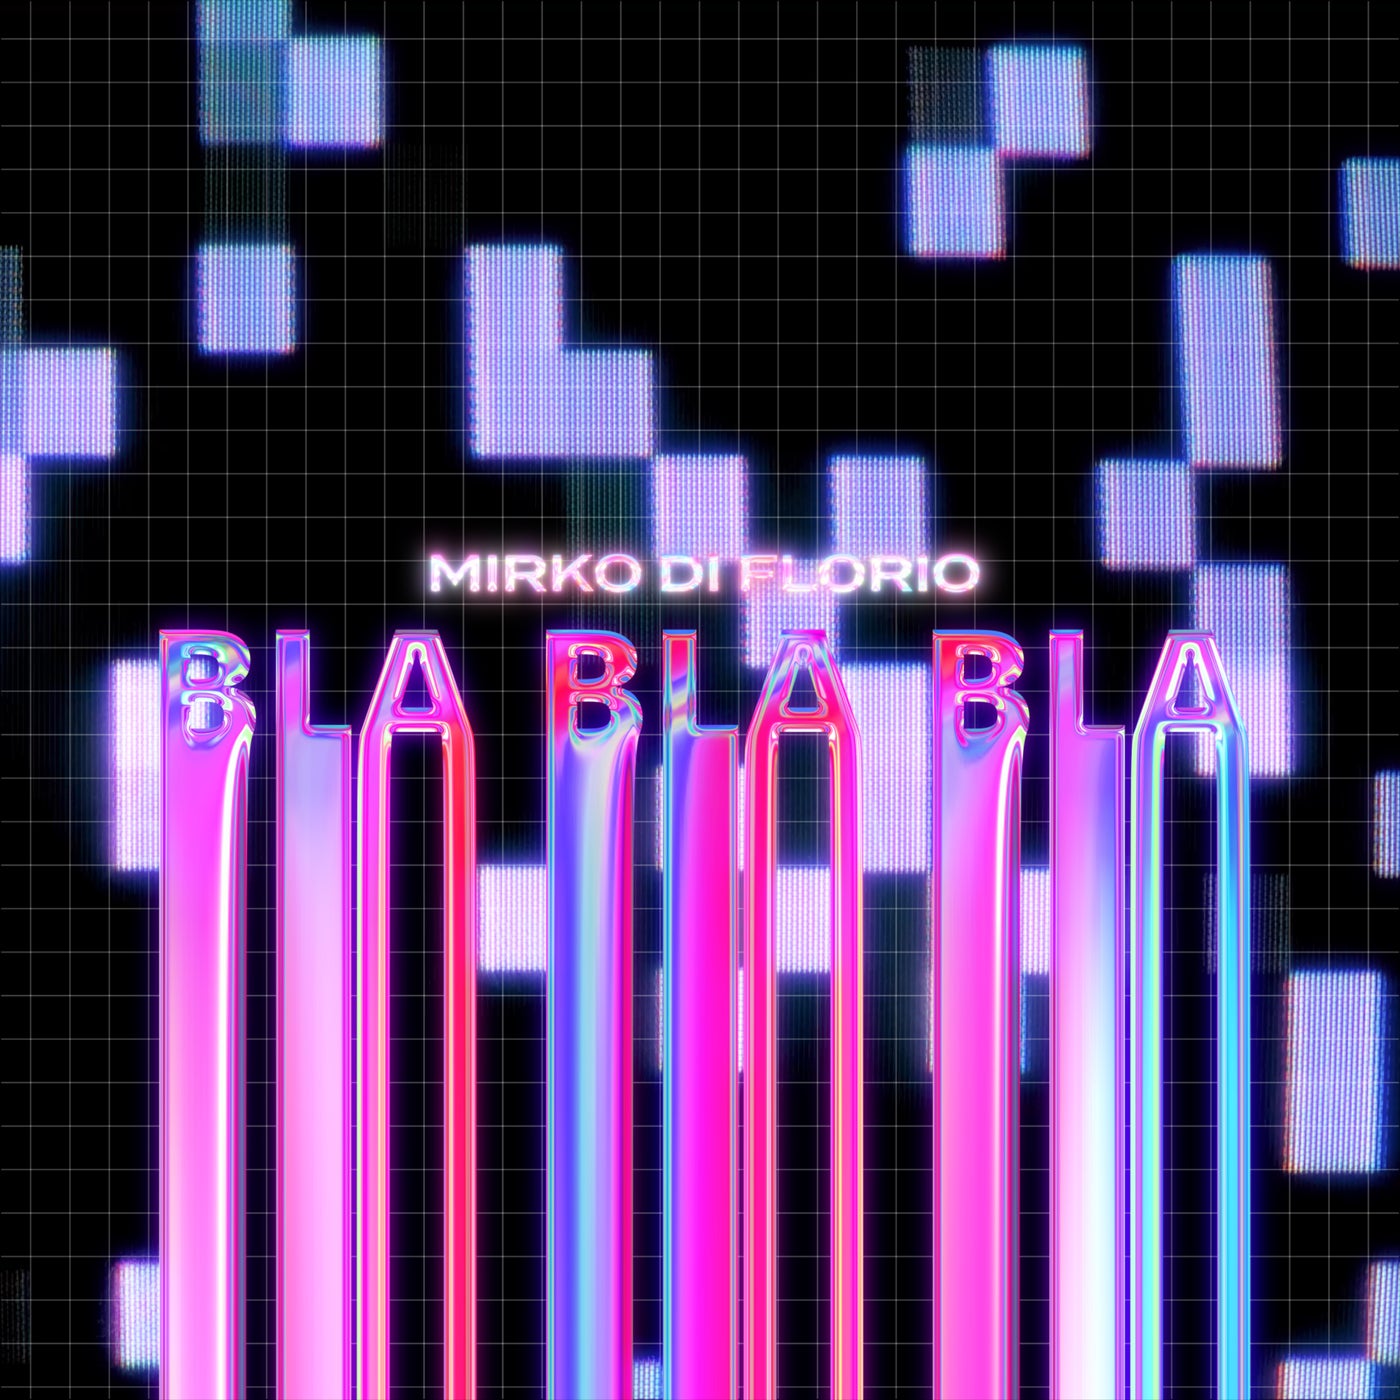 image cover: Mirko Di Florio - Bla Bla Bla - Extended Mix / UL03128